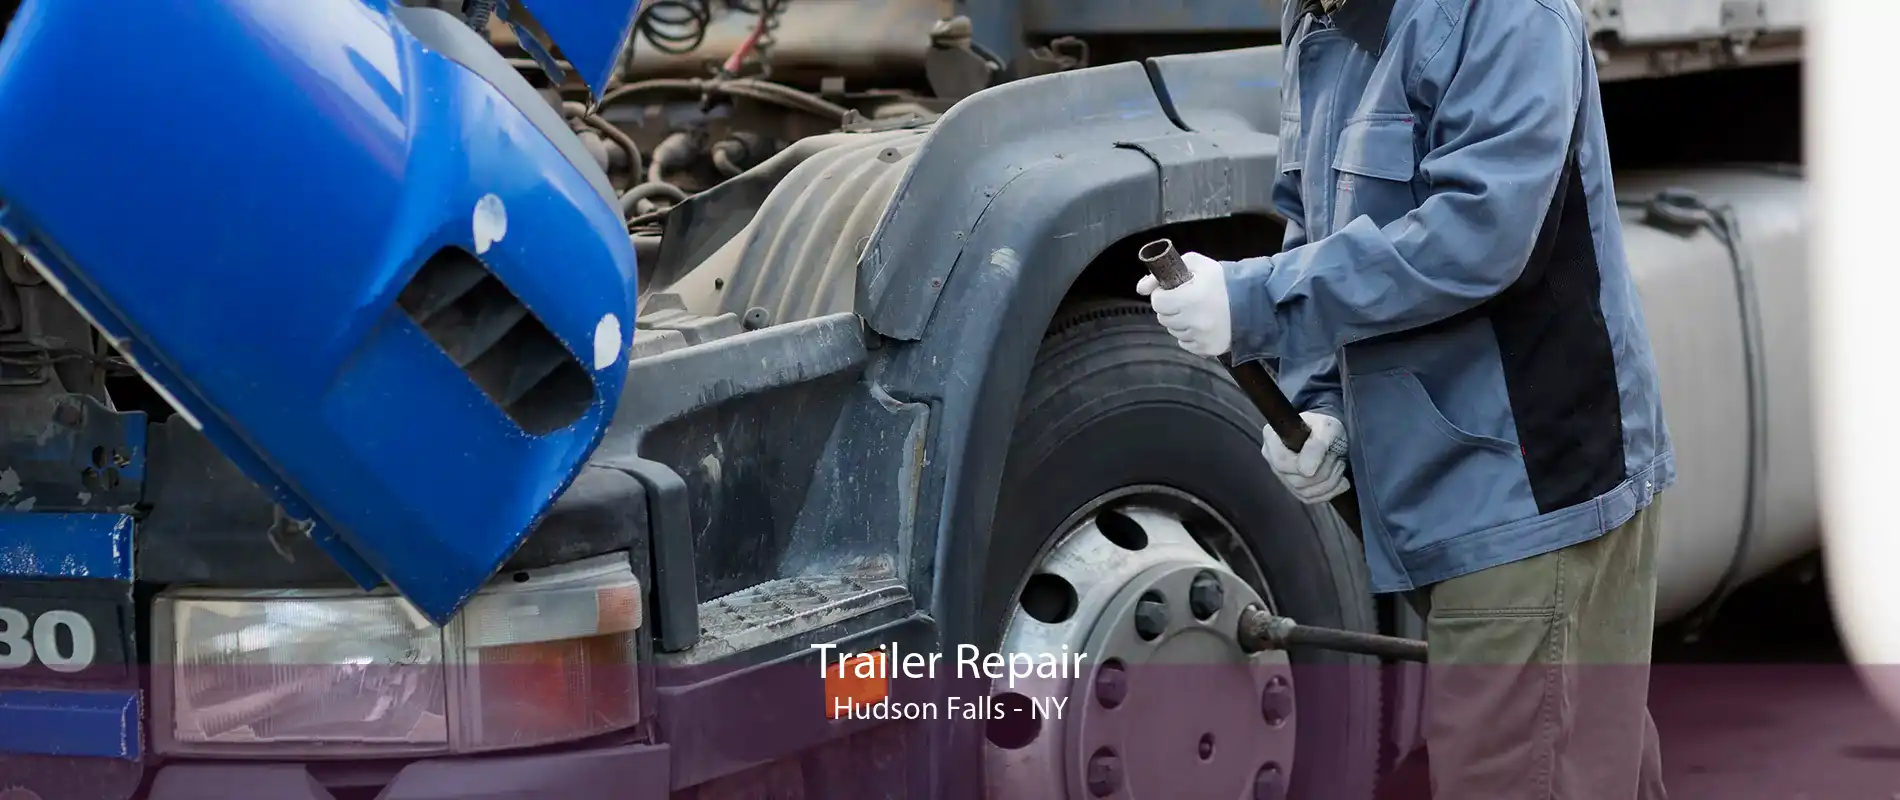 Trailer Repair Hudson Falls - NY